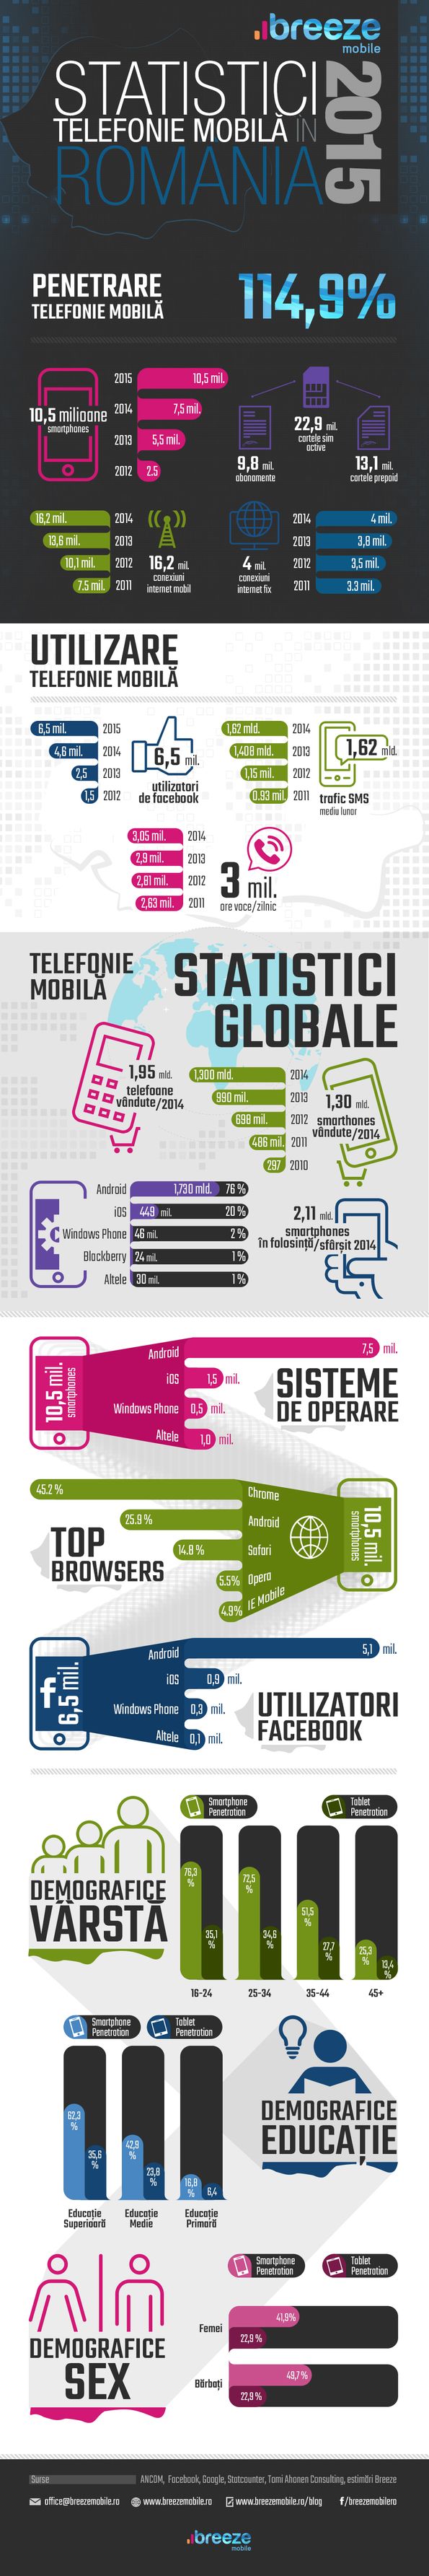 infographic telefonie mobila romania _2015